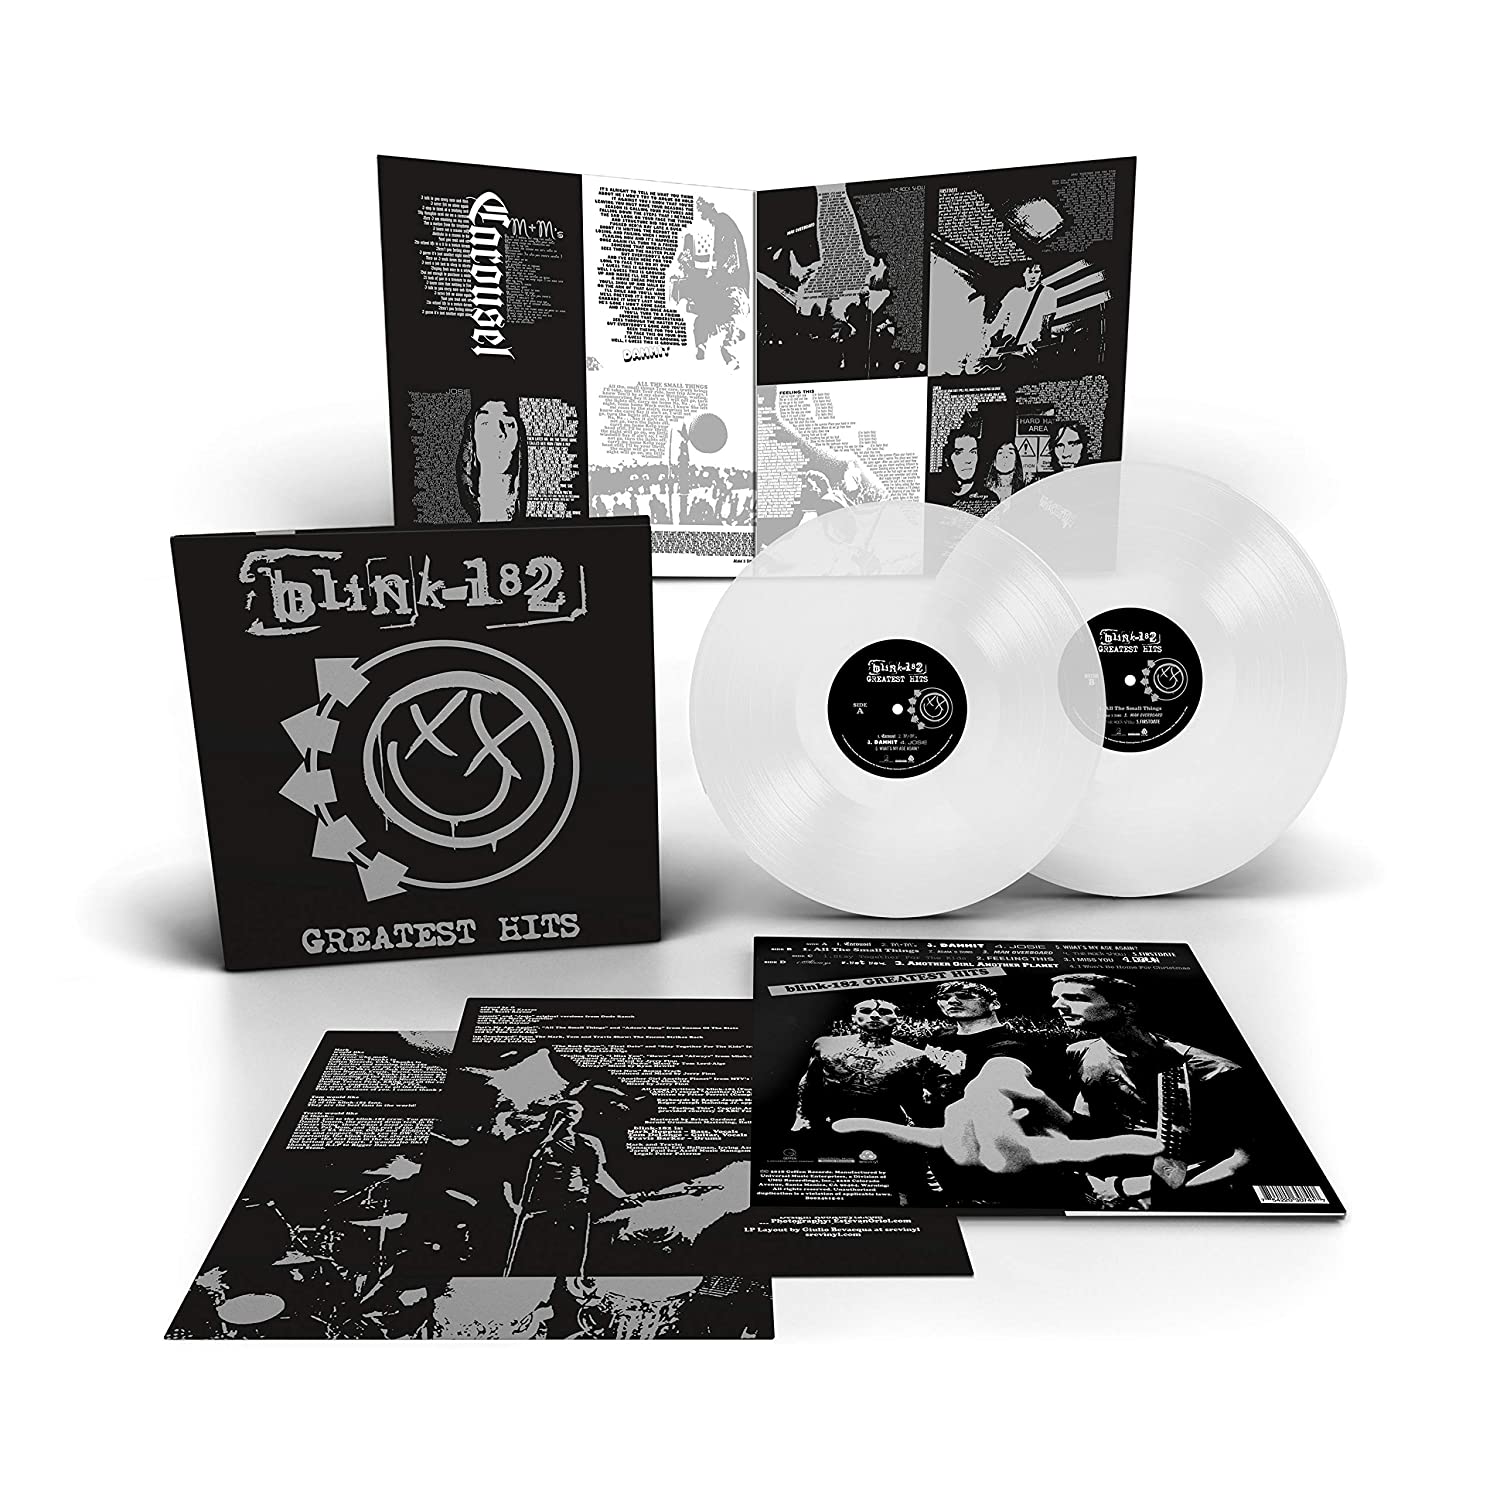 Blink-182 'Greatest Hits' (Colored) Vinyl Record LP - Sentinel Vinyl